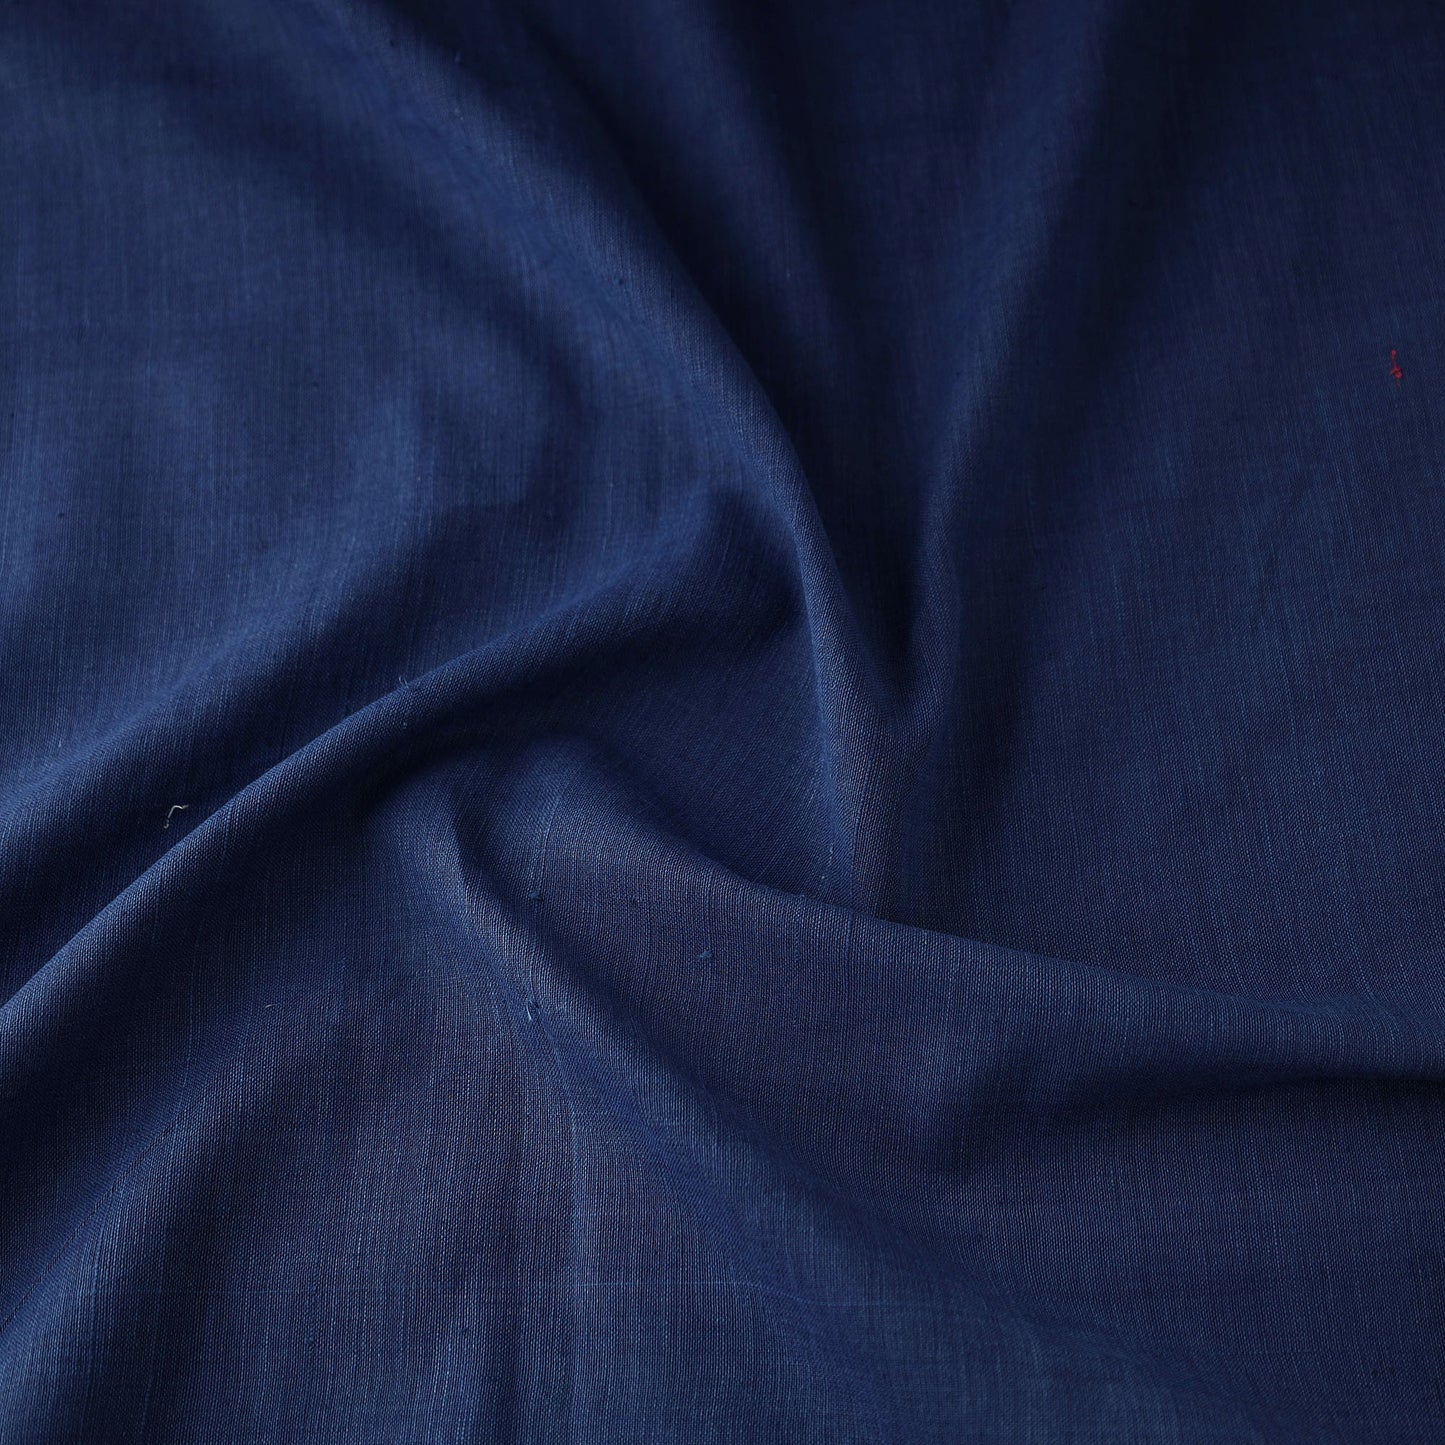 Plain Handloom Fabric